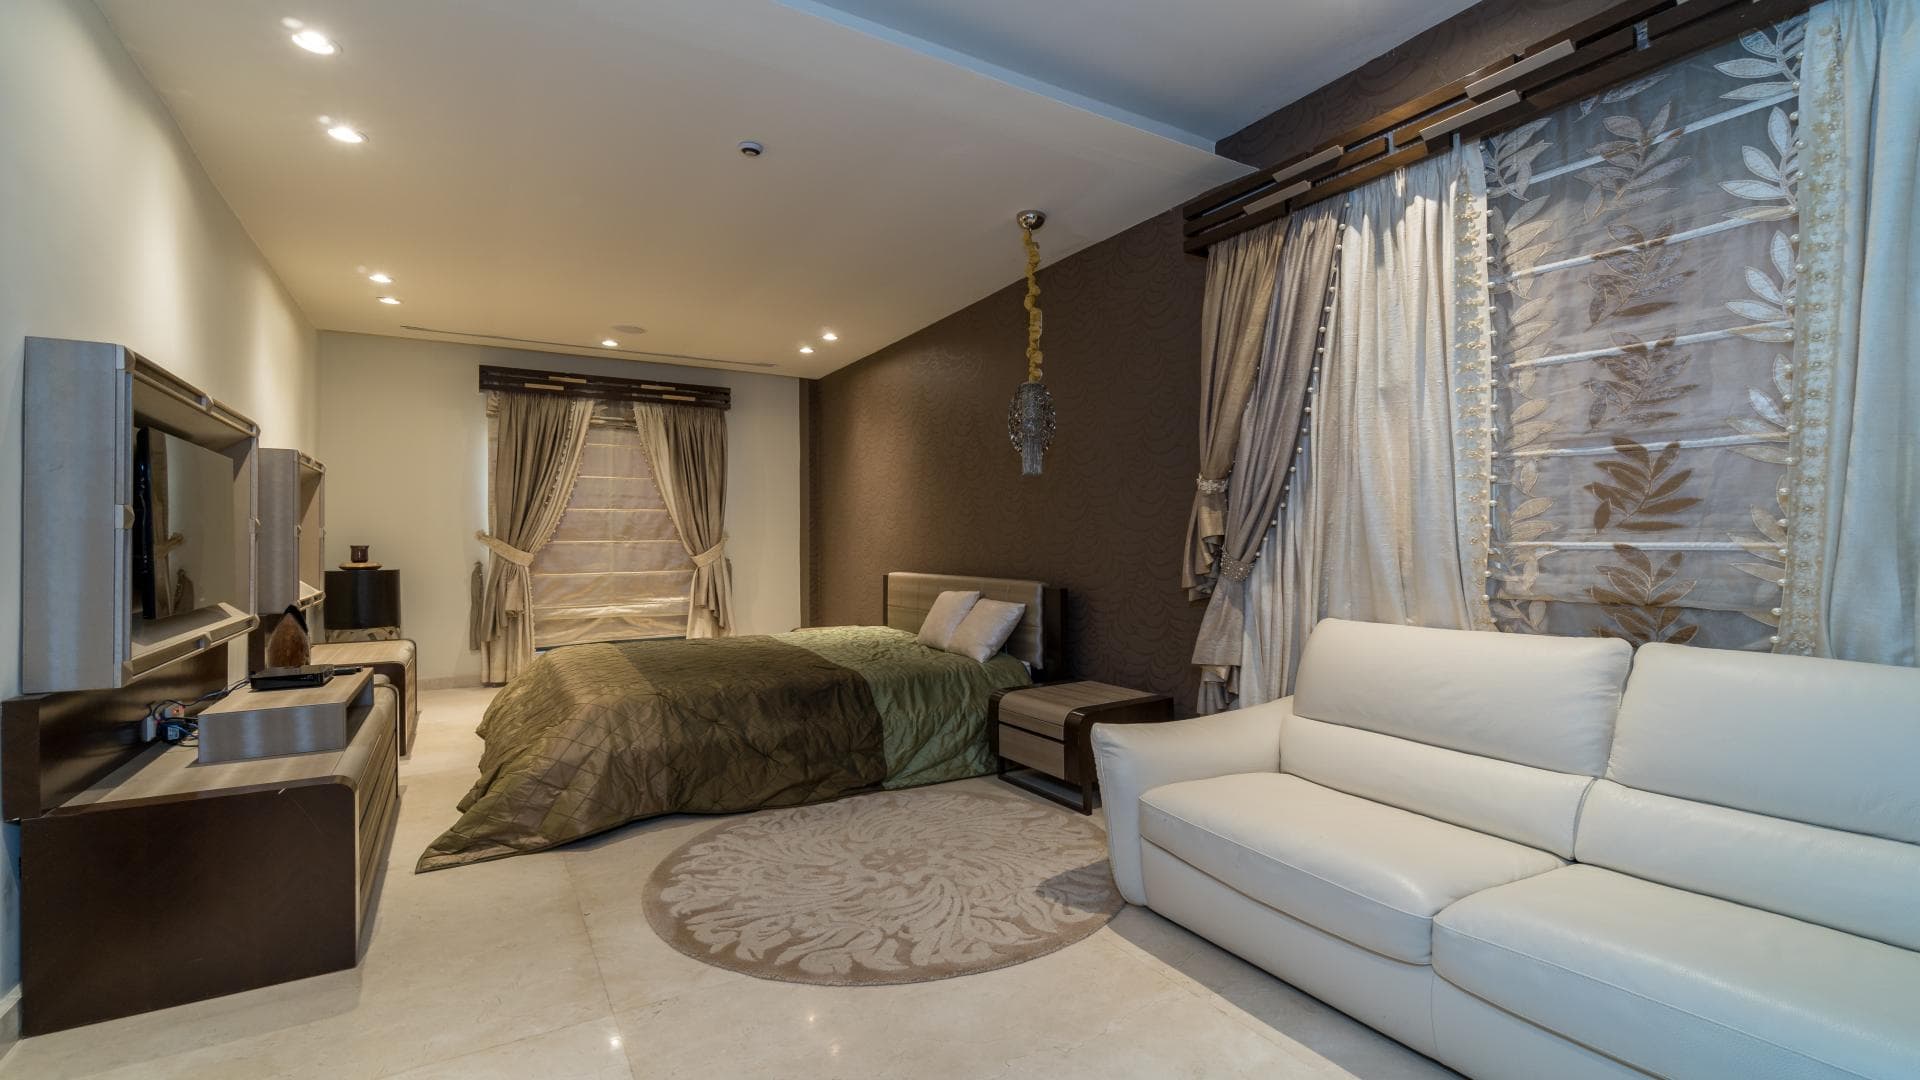 6 Bedroom  For Rent Signature Villas Lp15015 300fe143fd003200.jpg